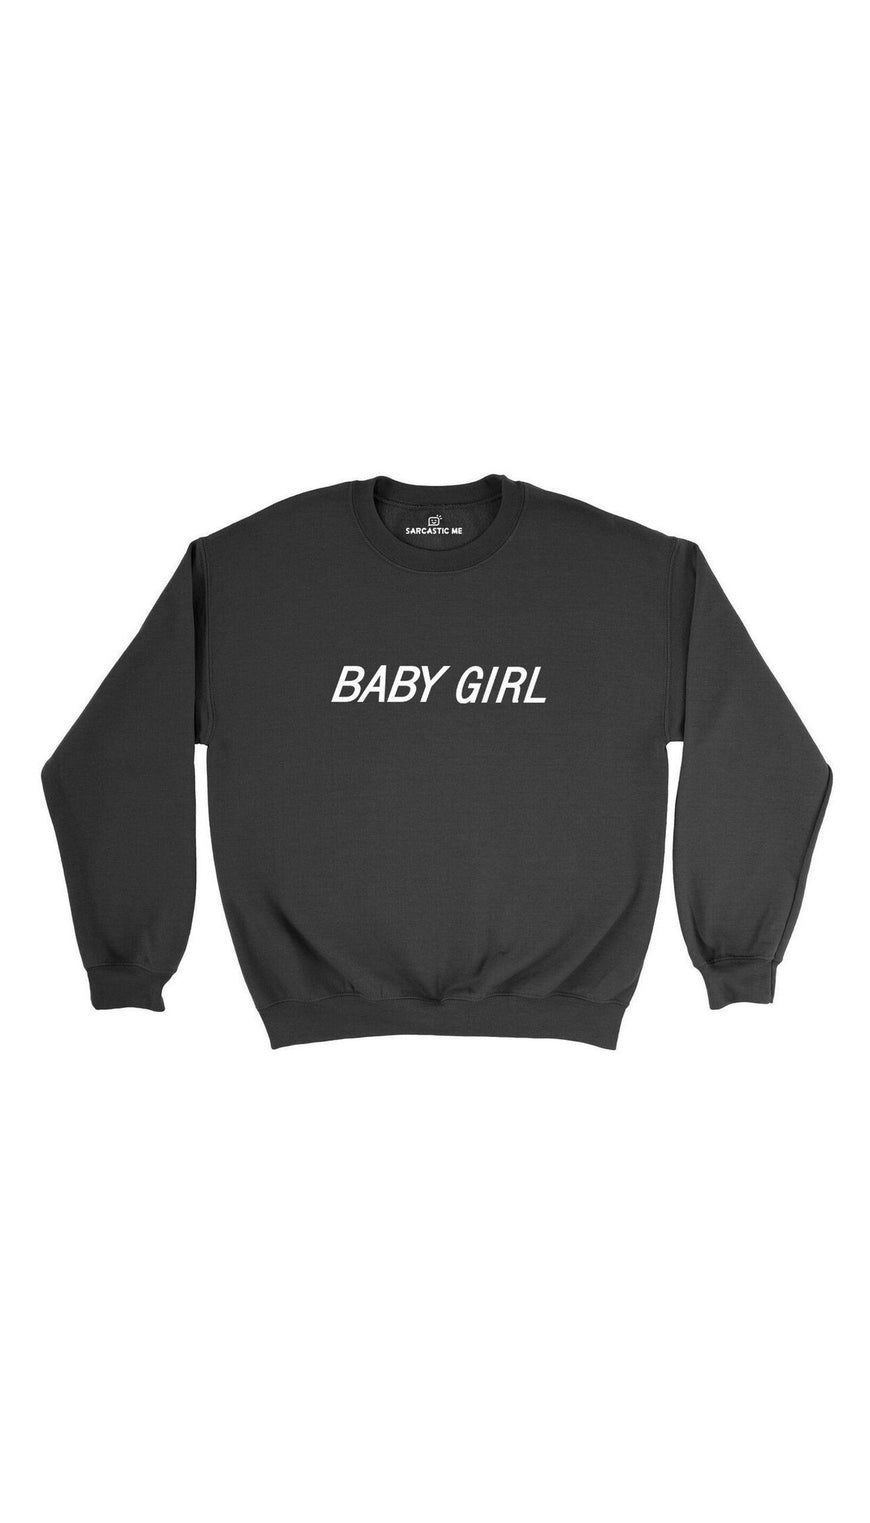 Baby Girl Black Unisex Pullover Sweatshirt | Sarcastic Me